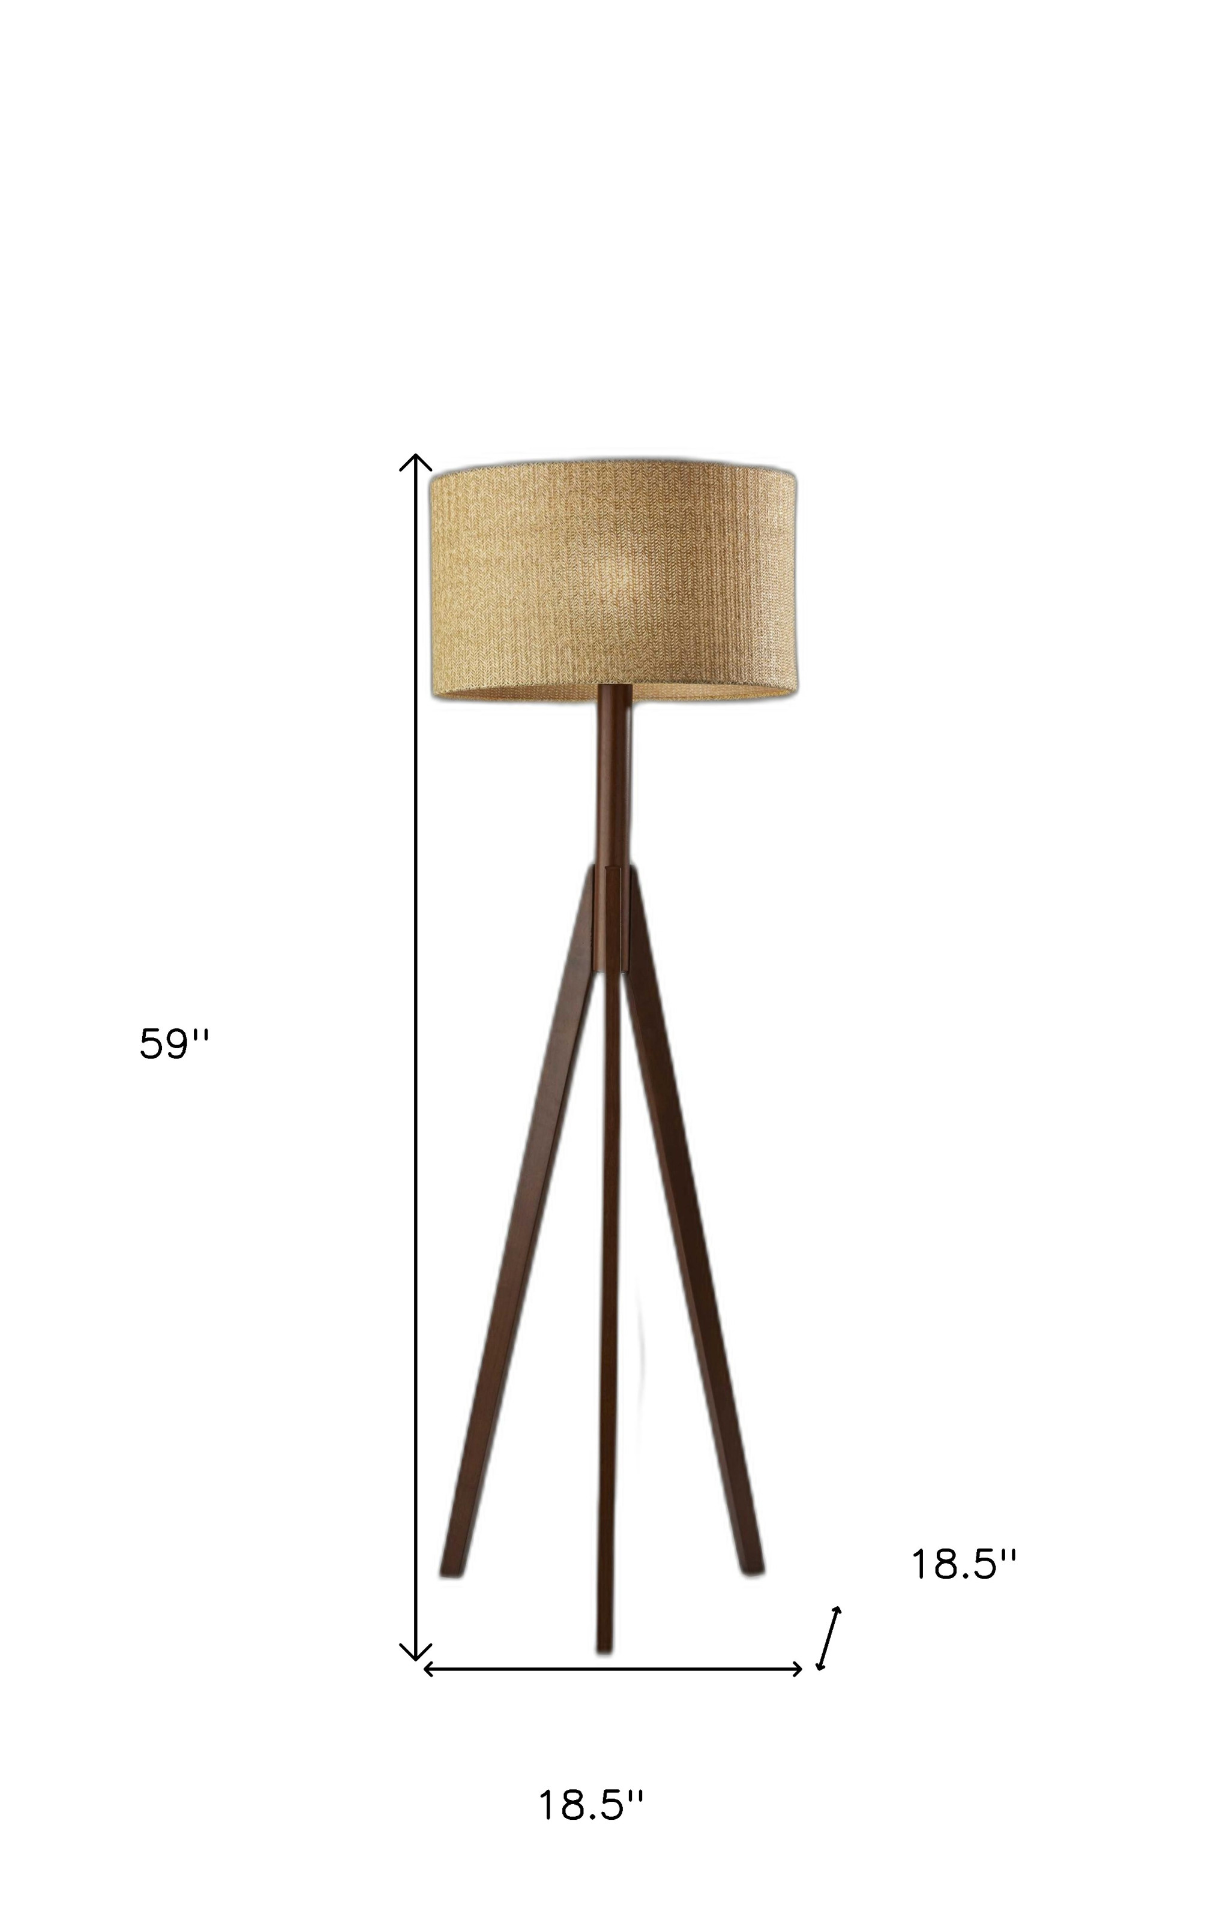 Modern & Industrial Designer Style Tripod Floor Lamp (59"H)